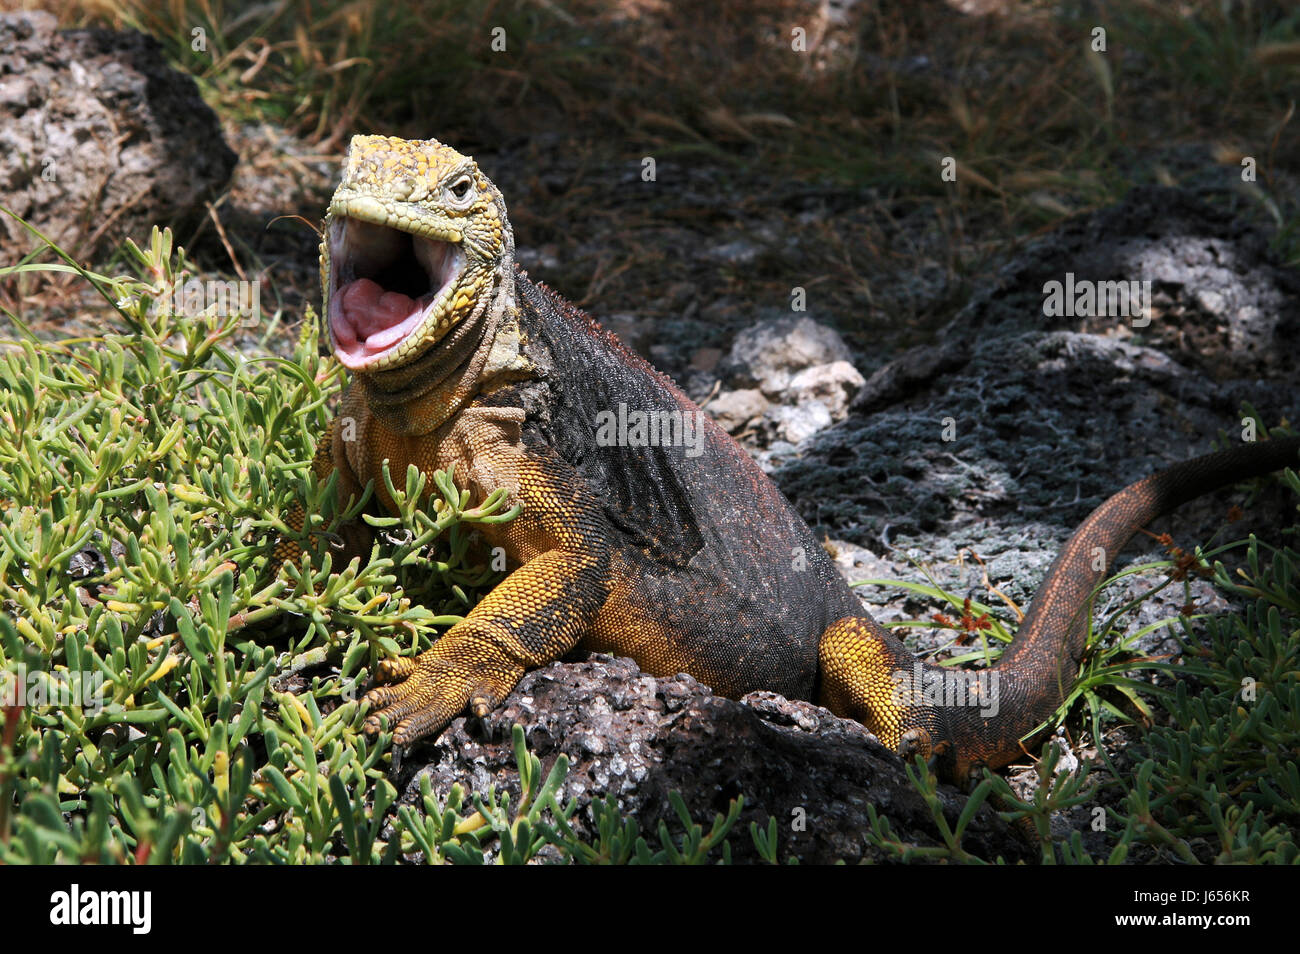 Reptilien Saurier Leguan Drachen Reptilien Ecuador Kite Drachen Reptil Nationalpark Stockfoto